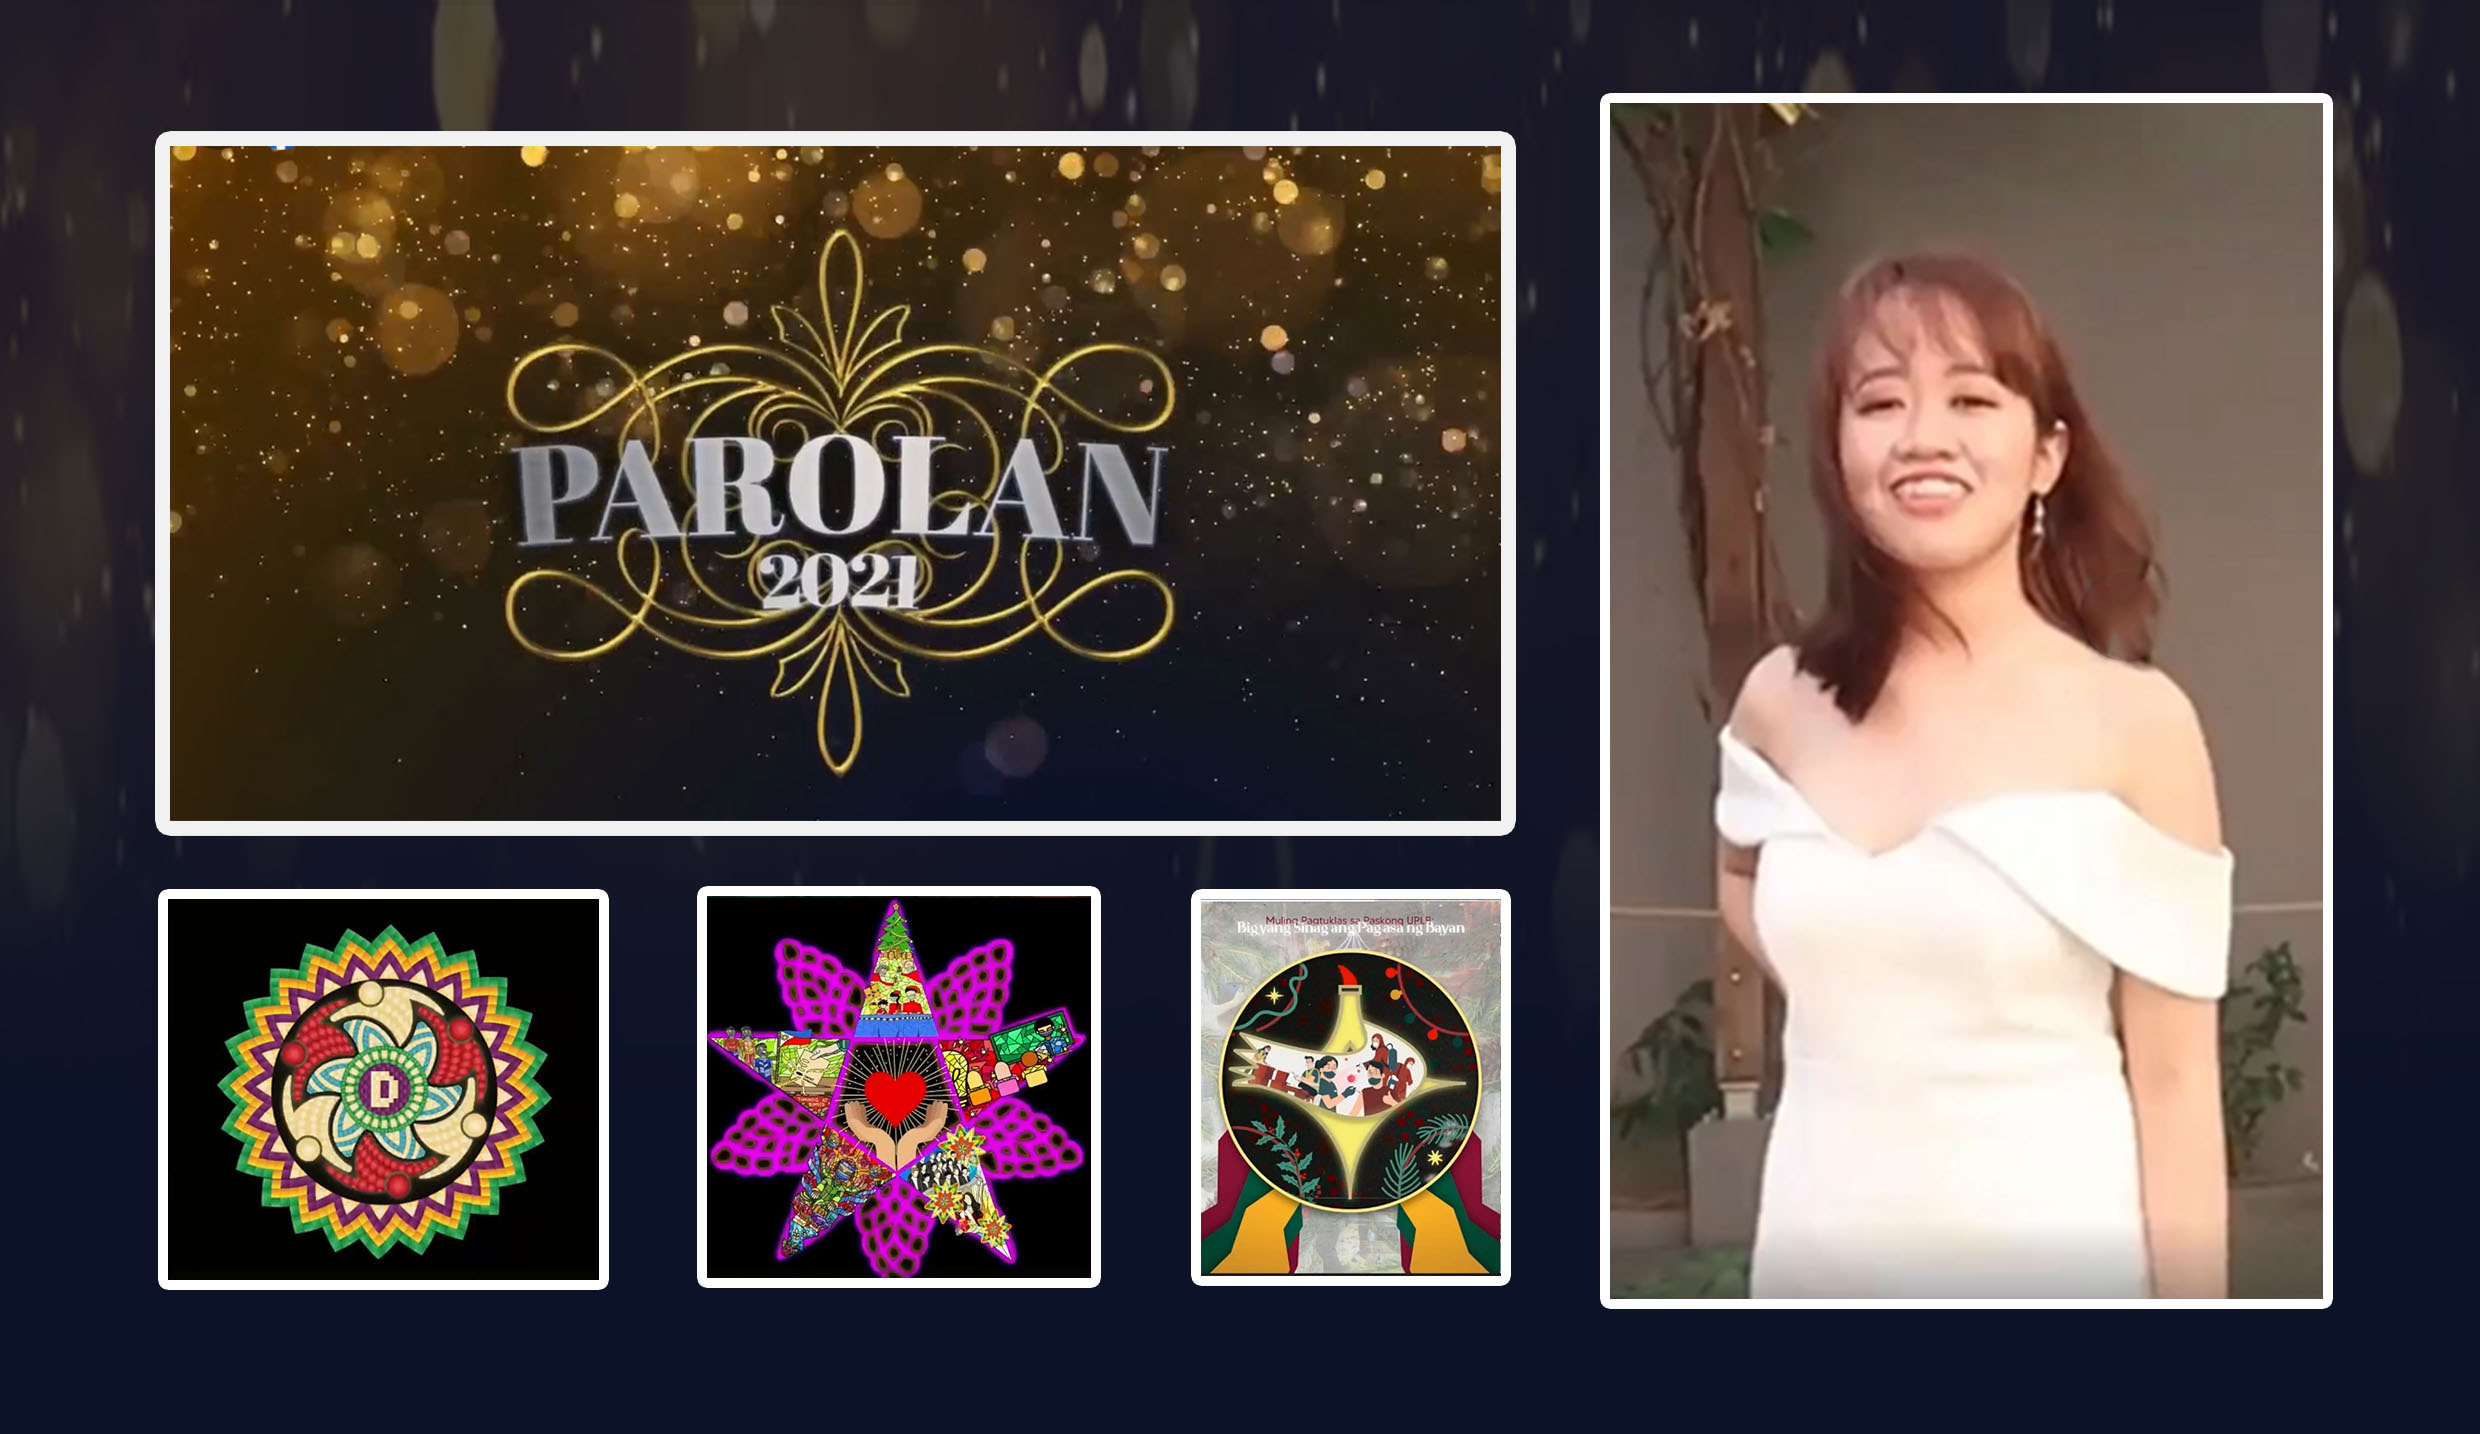 UPLB Parolan is back as a virtual celebration